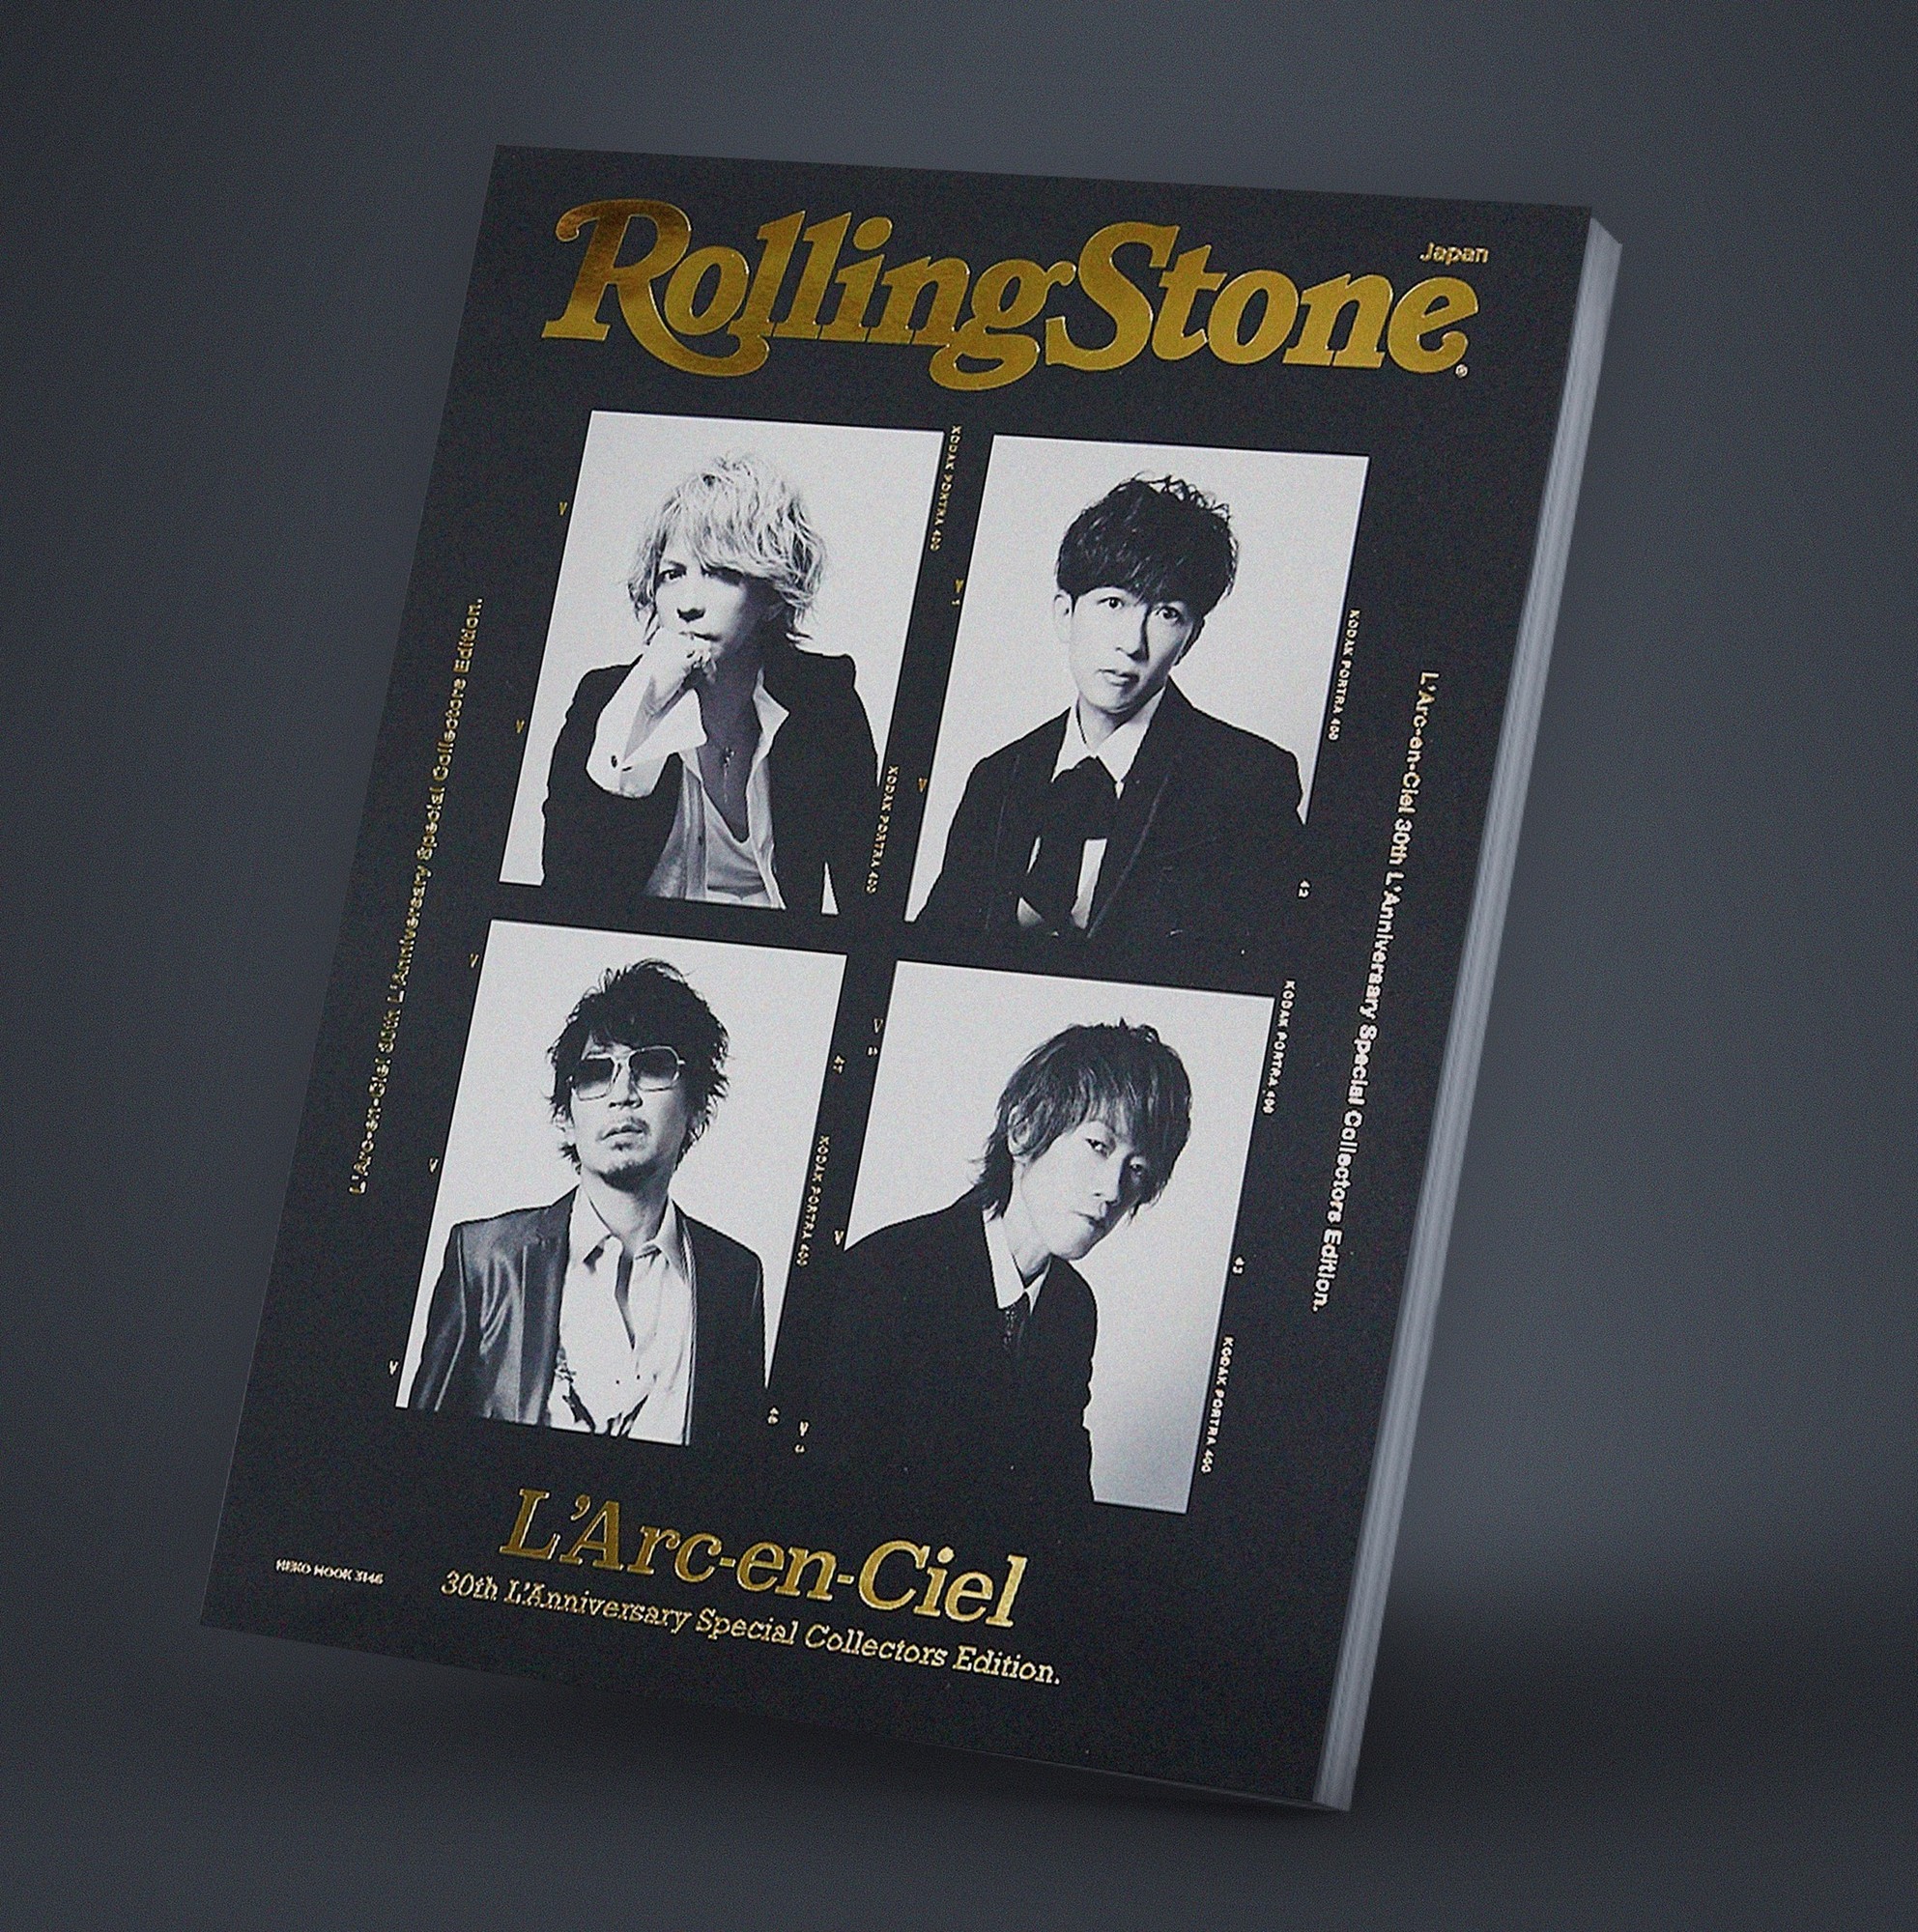 Rolling Stone Japan L'Arc-en-Ciel 30th L'Anniversary Special 